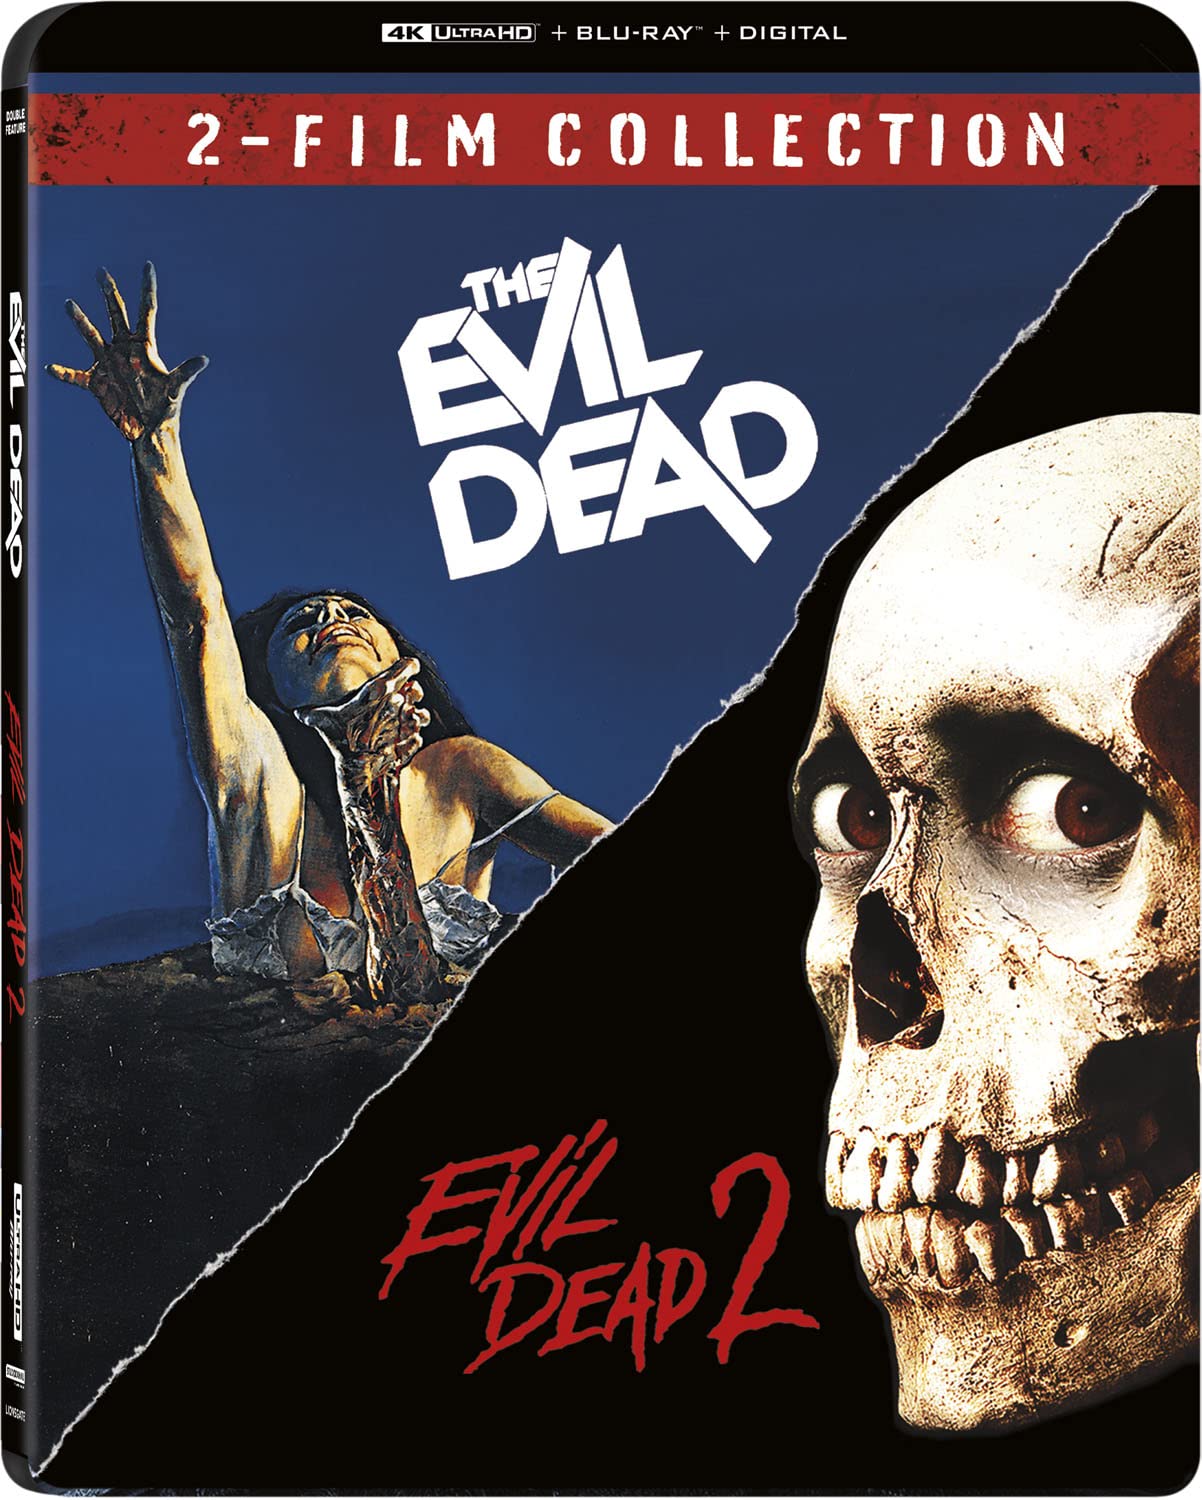 The-Evil-Dead-1-Evil-Dead-2-2-Film-Collection